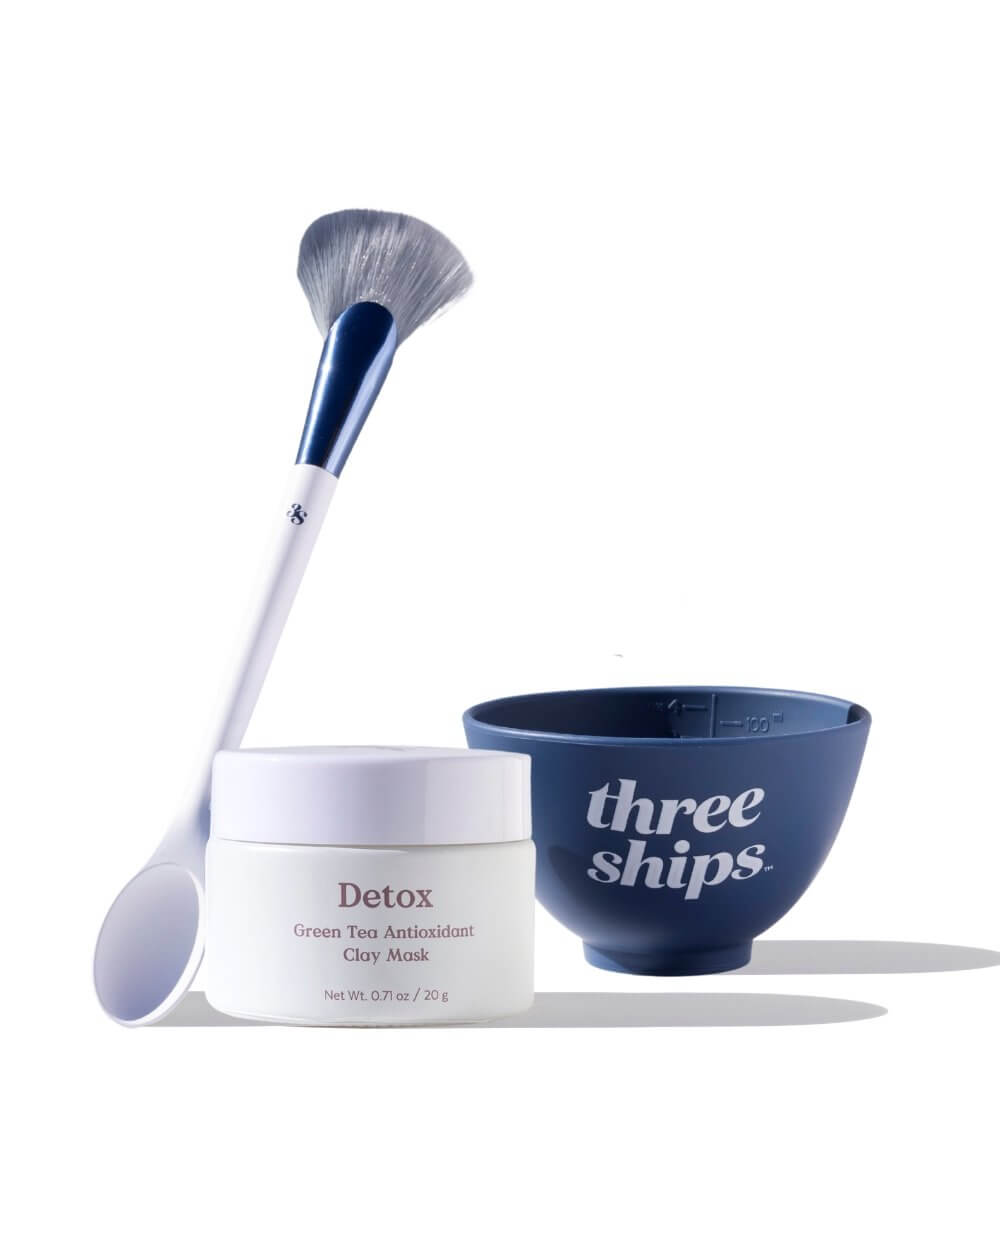 FREE Detox Complete Mask Bundle Three Ships GWP Natural Vegan Cruelty-free Skincare